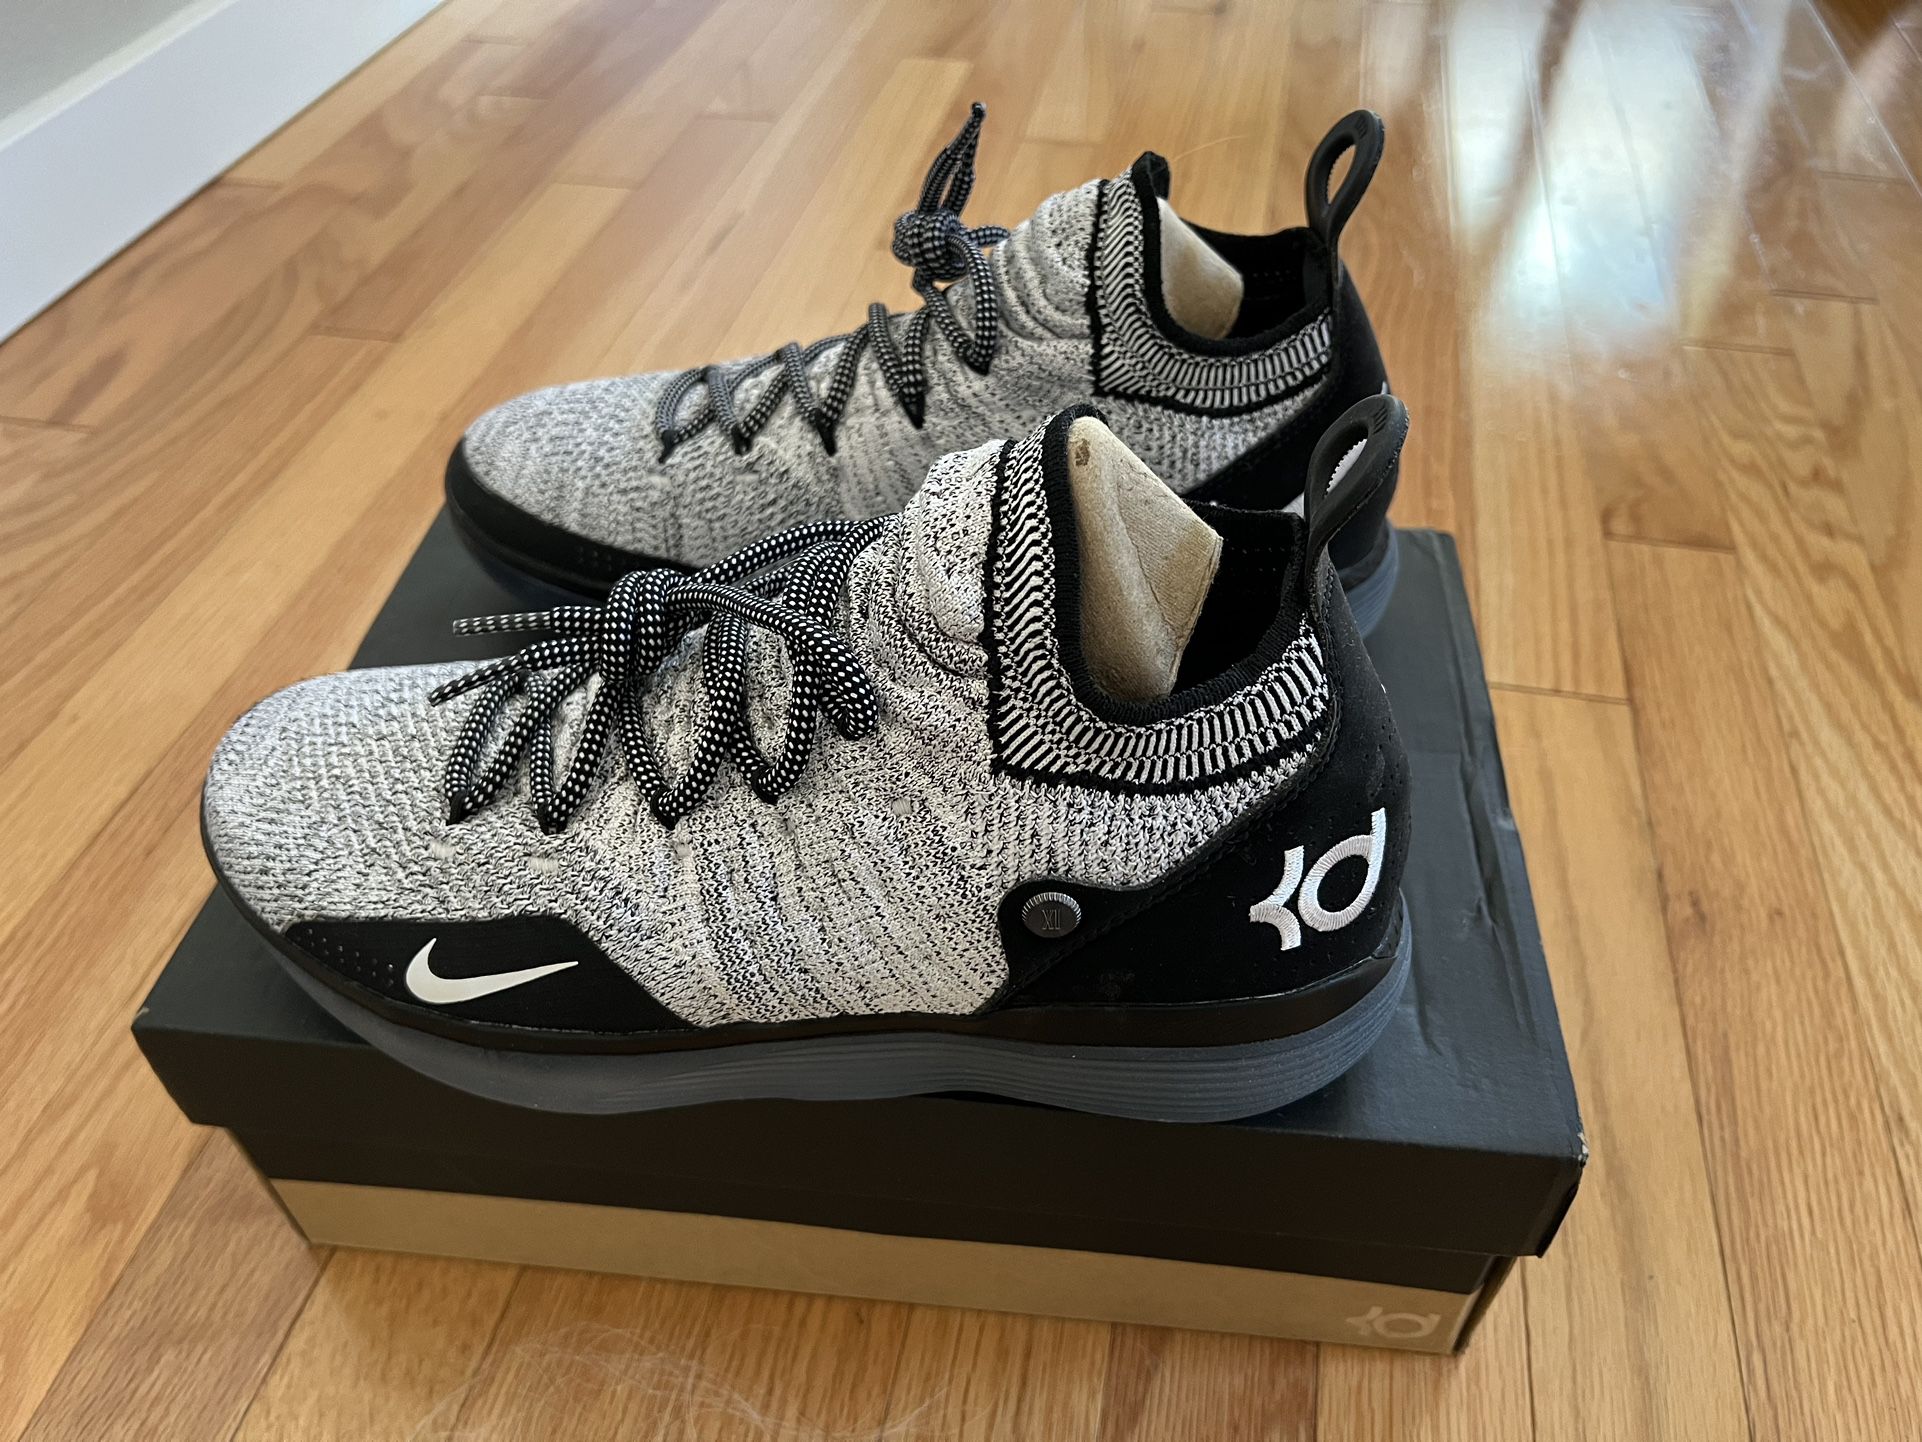 Nike Zoom KD11 White Black AO2604-006 Mens Basketball Shoes Sneakers Size 8.5